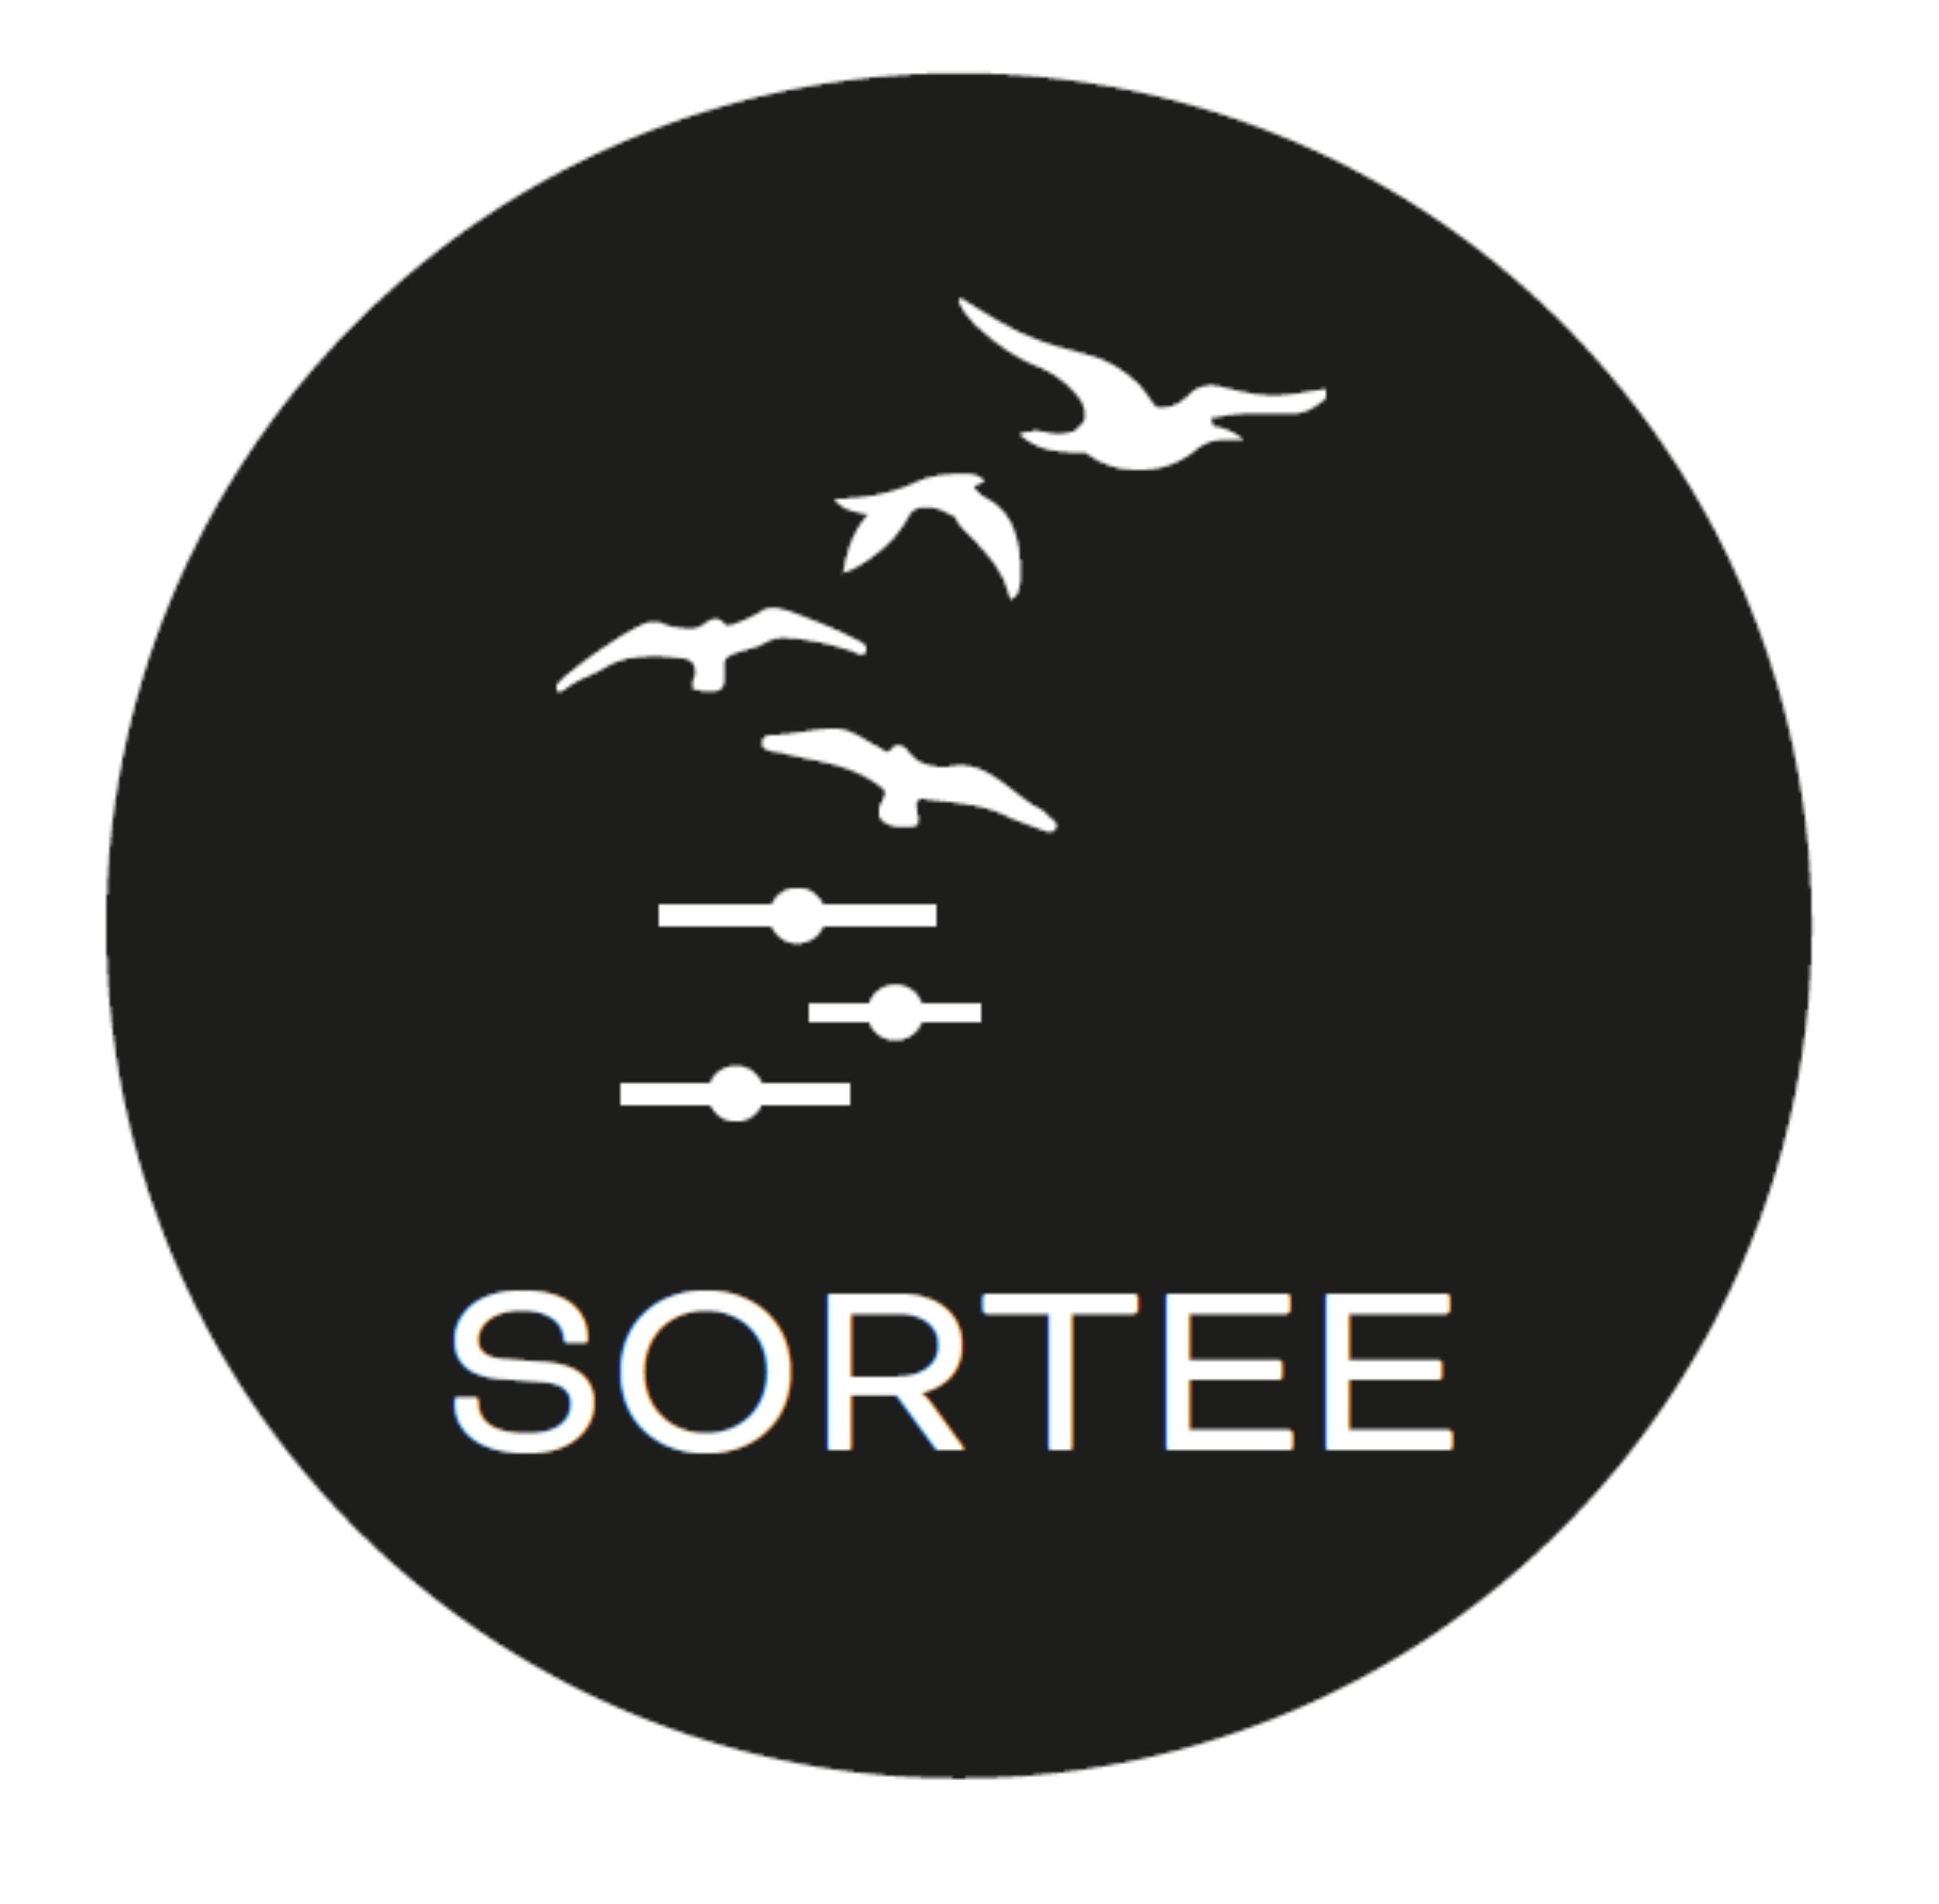 SORTEE logo